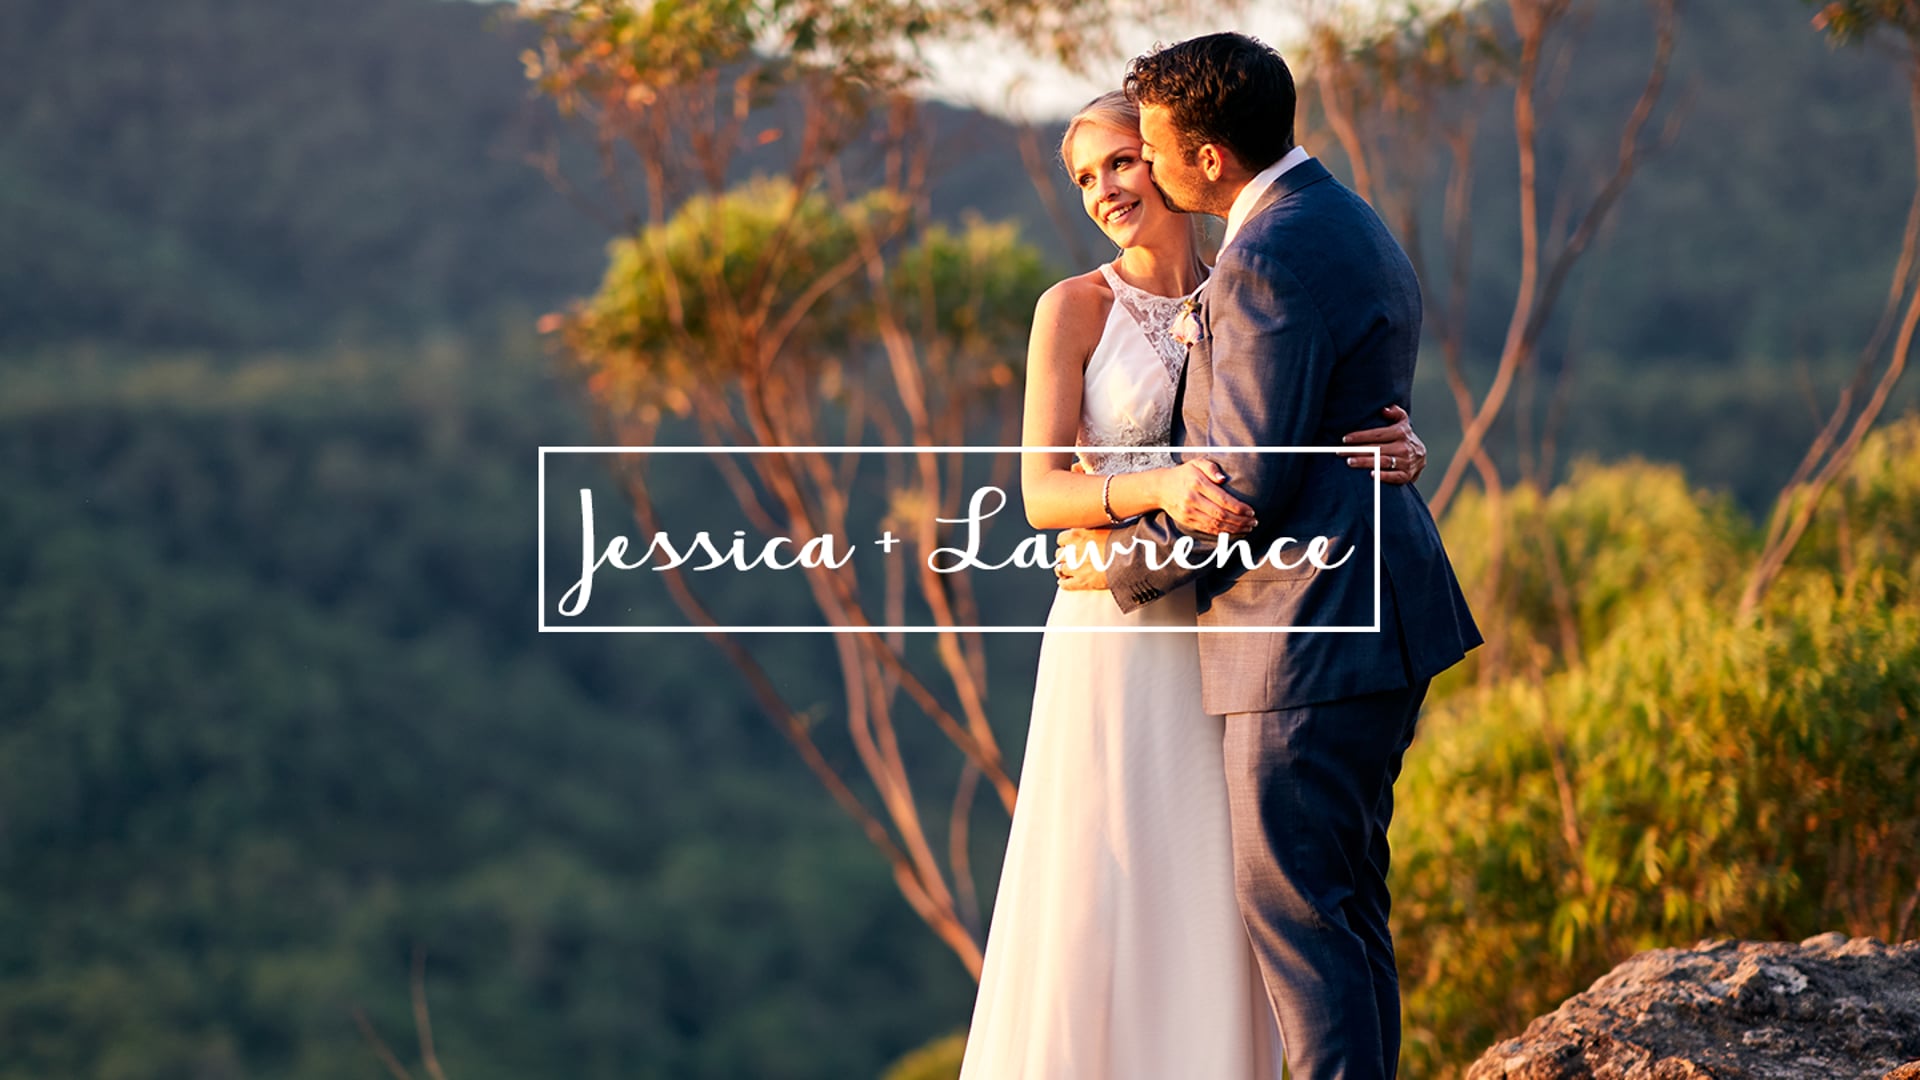 Jessica + Lawrence // Wedding Highlights